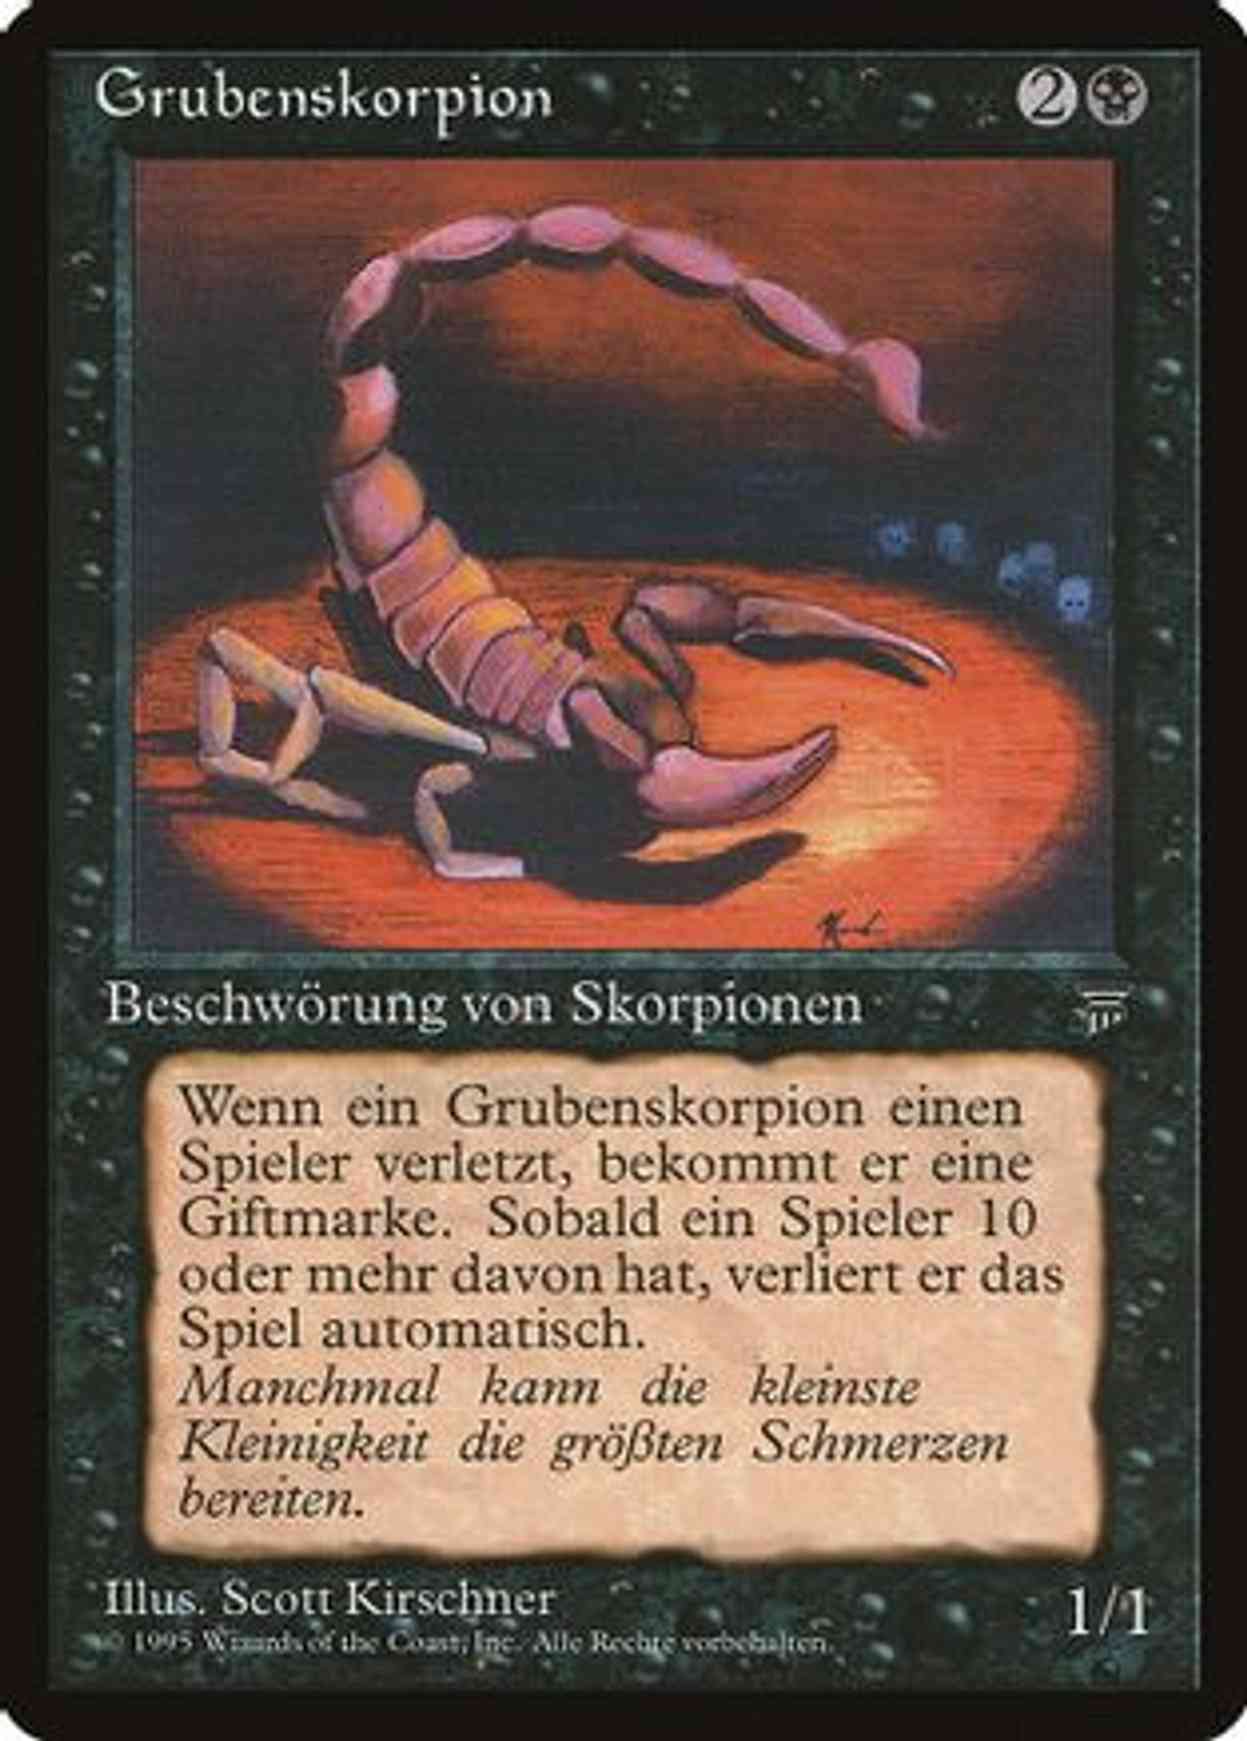 Pit Scorpion (German) - "Grubenskorpion" magic card front